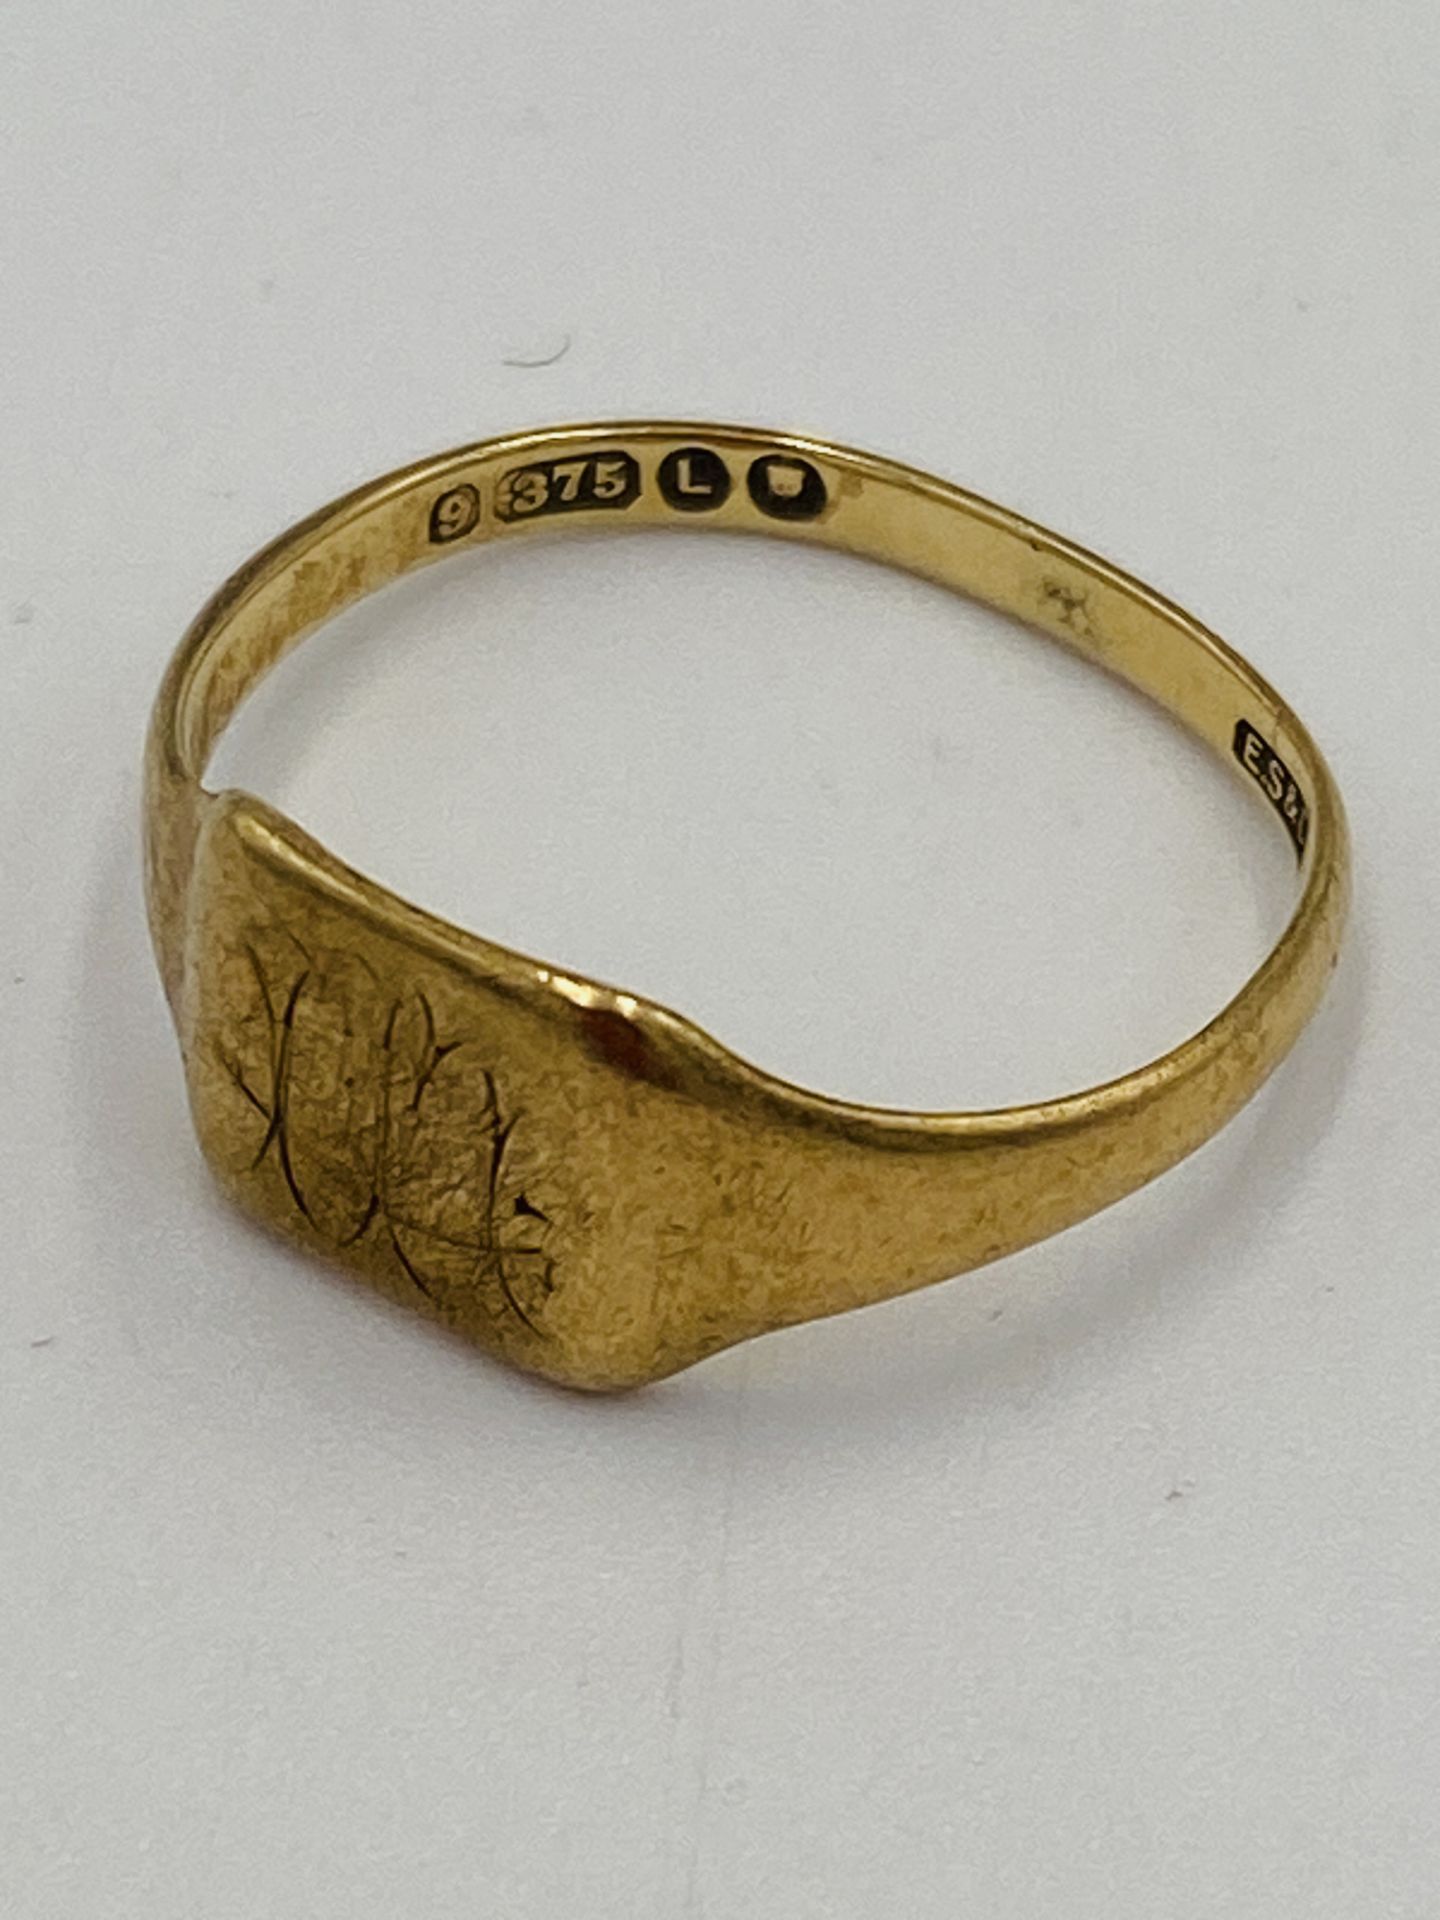 9ct gold signet ring - Image 5 of 5